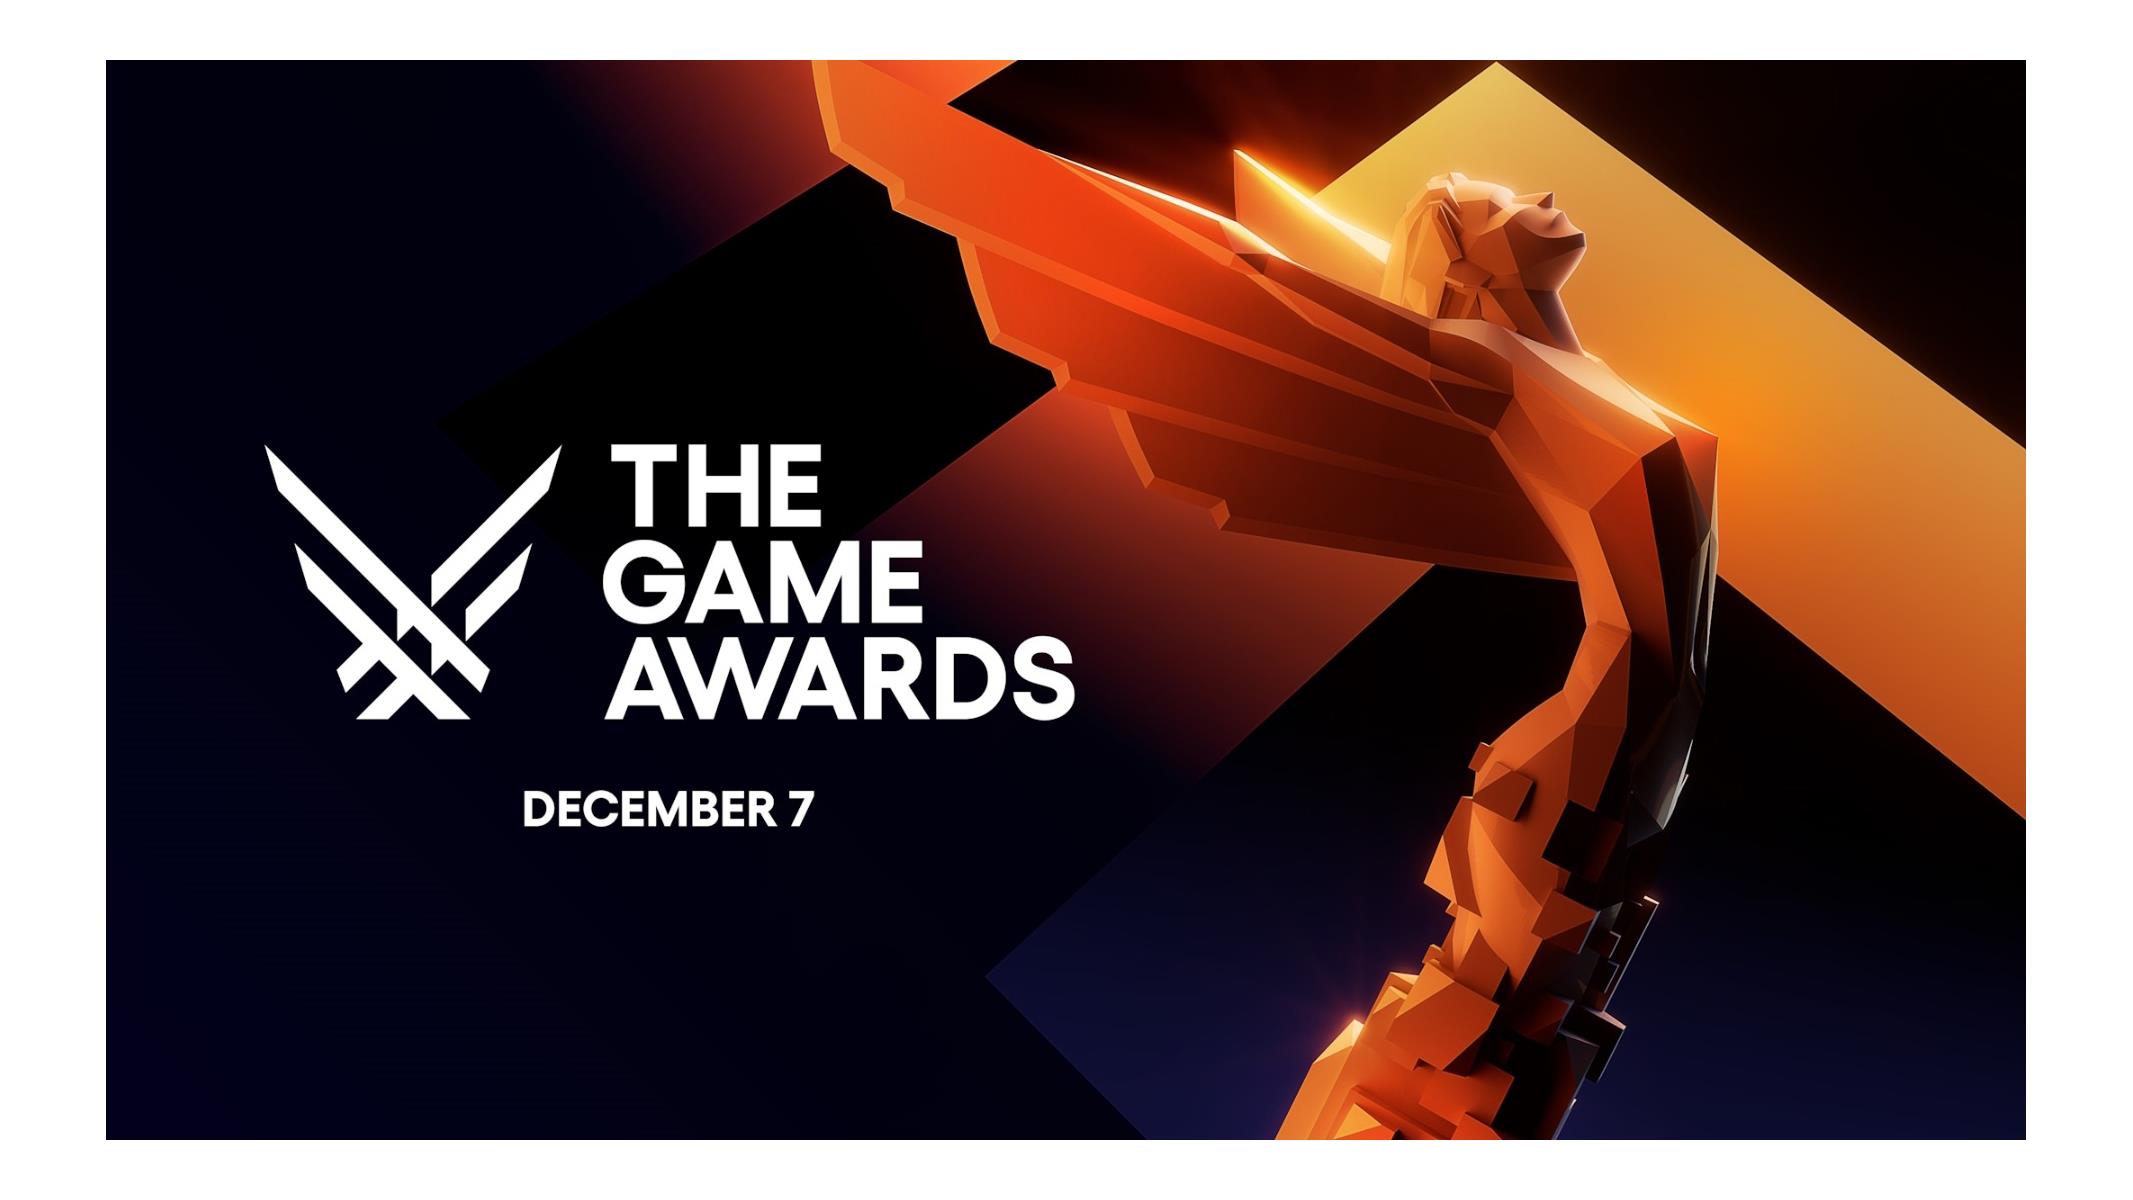 Alan Wake 2' Wins 3 Awards at The Horror Game Awards 2023